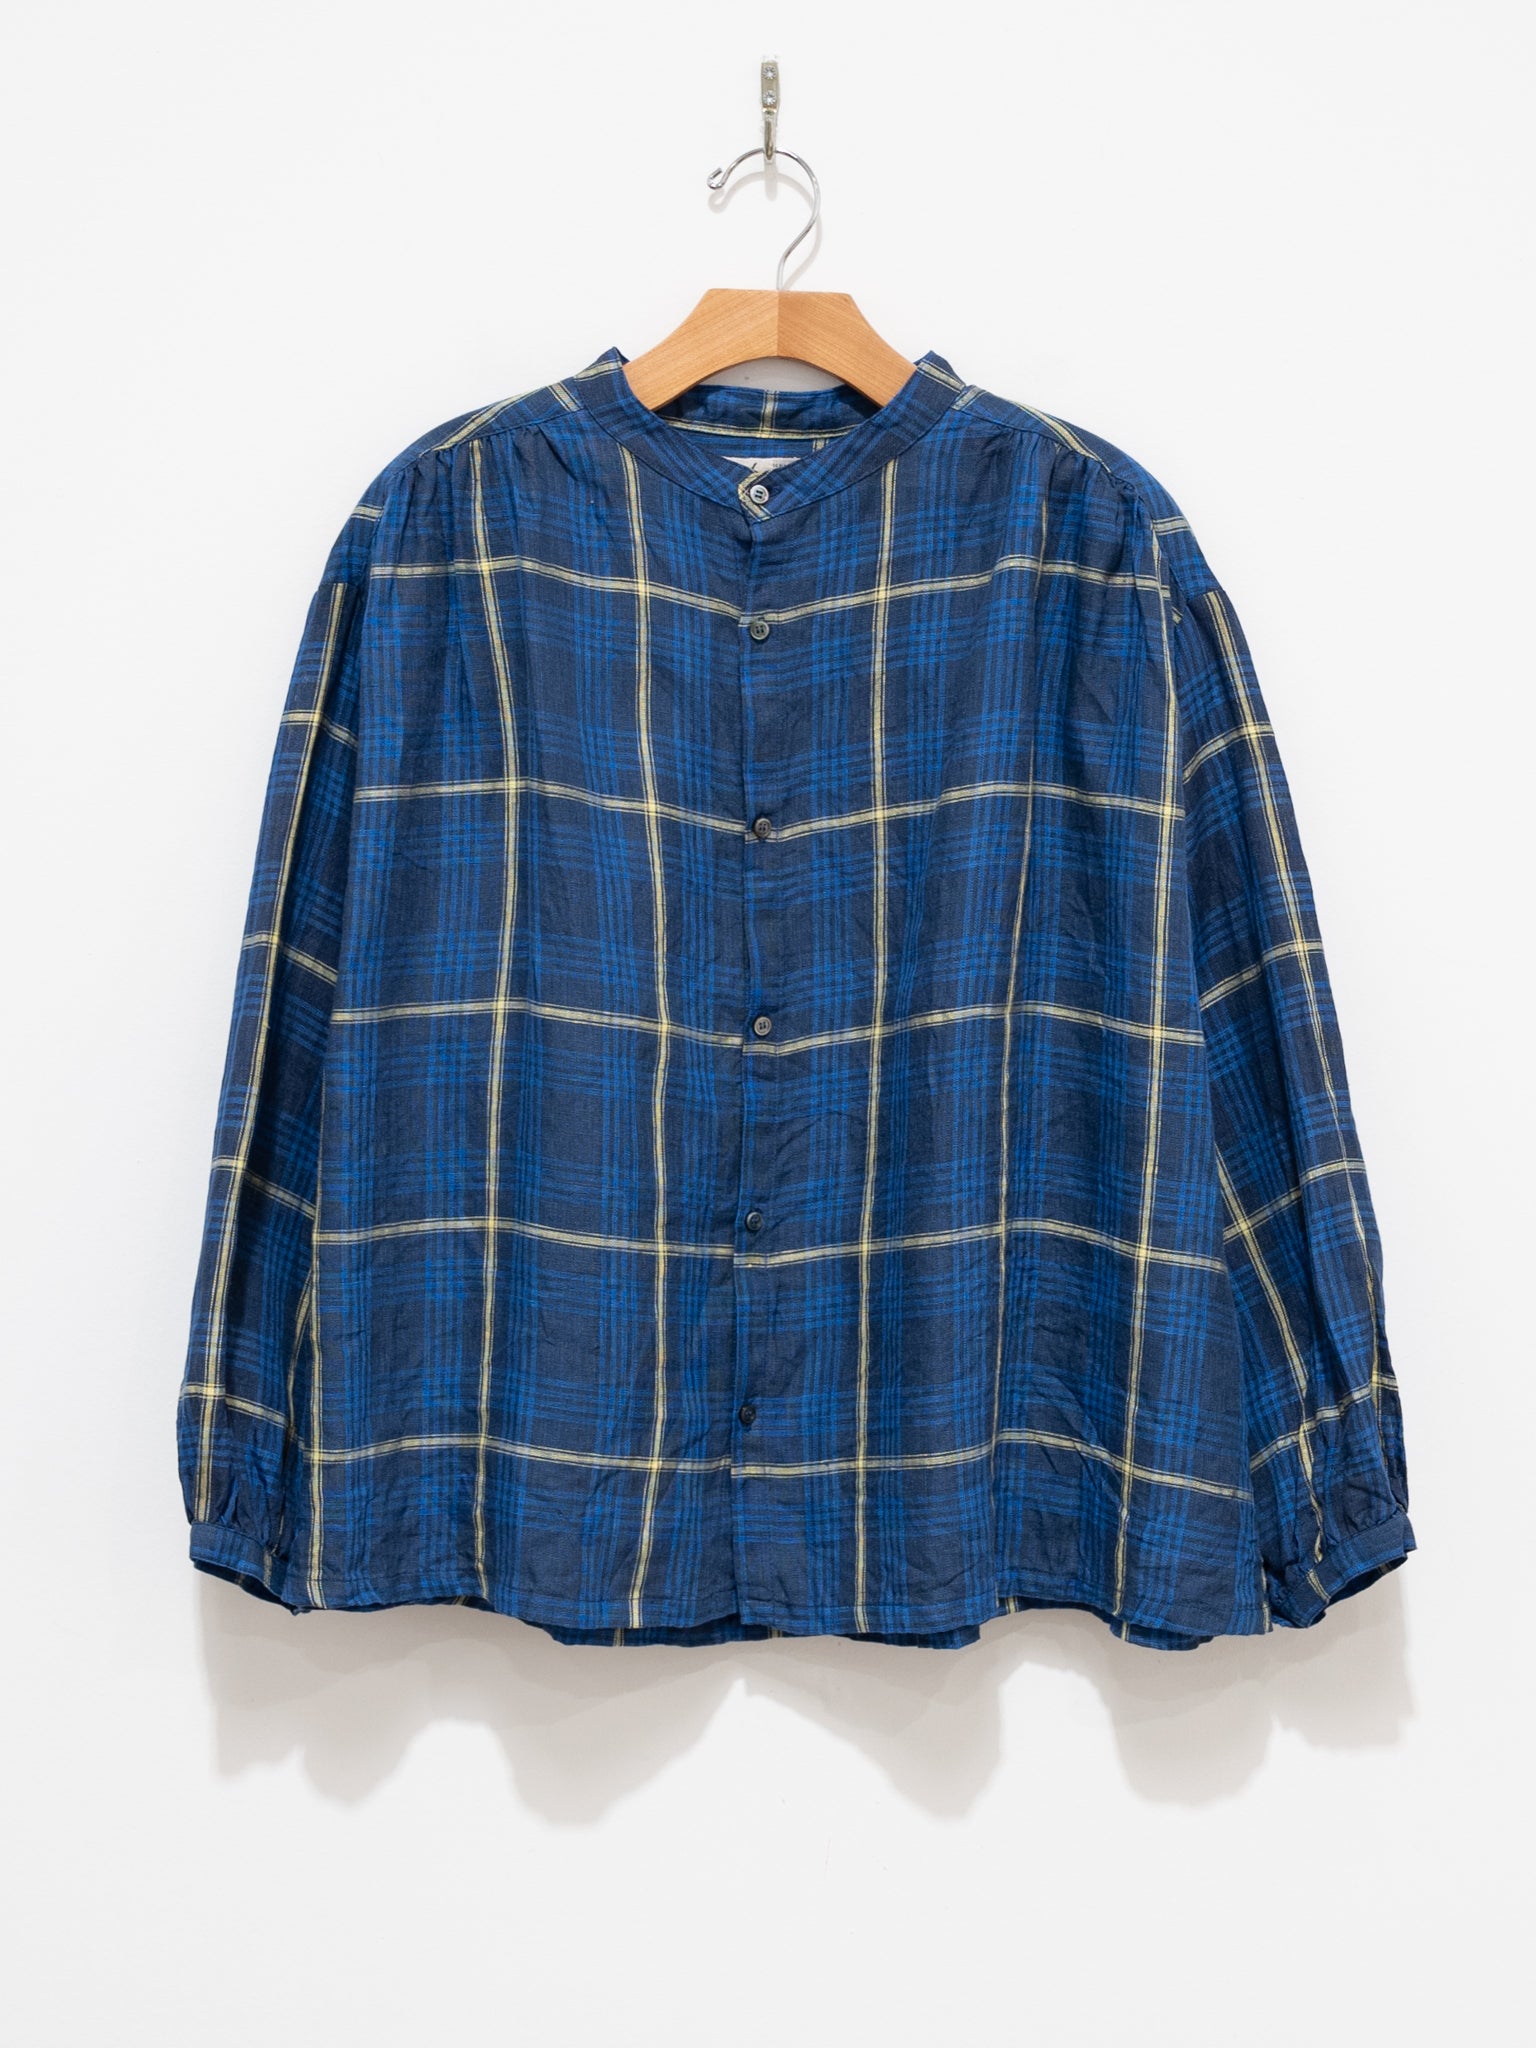 Namu Shop - Ichi Antiquites Linen Check Shirt - Blue